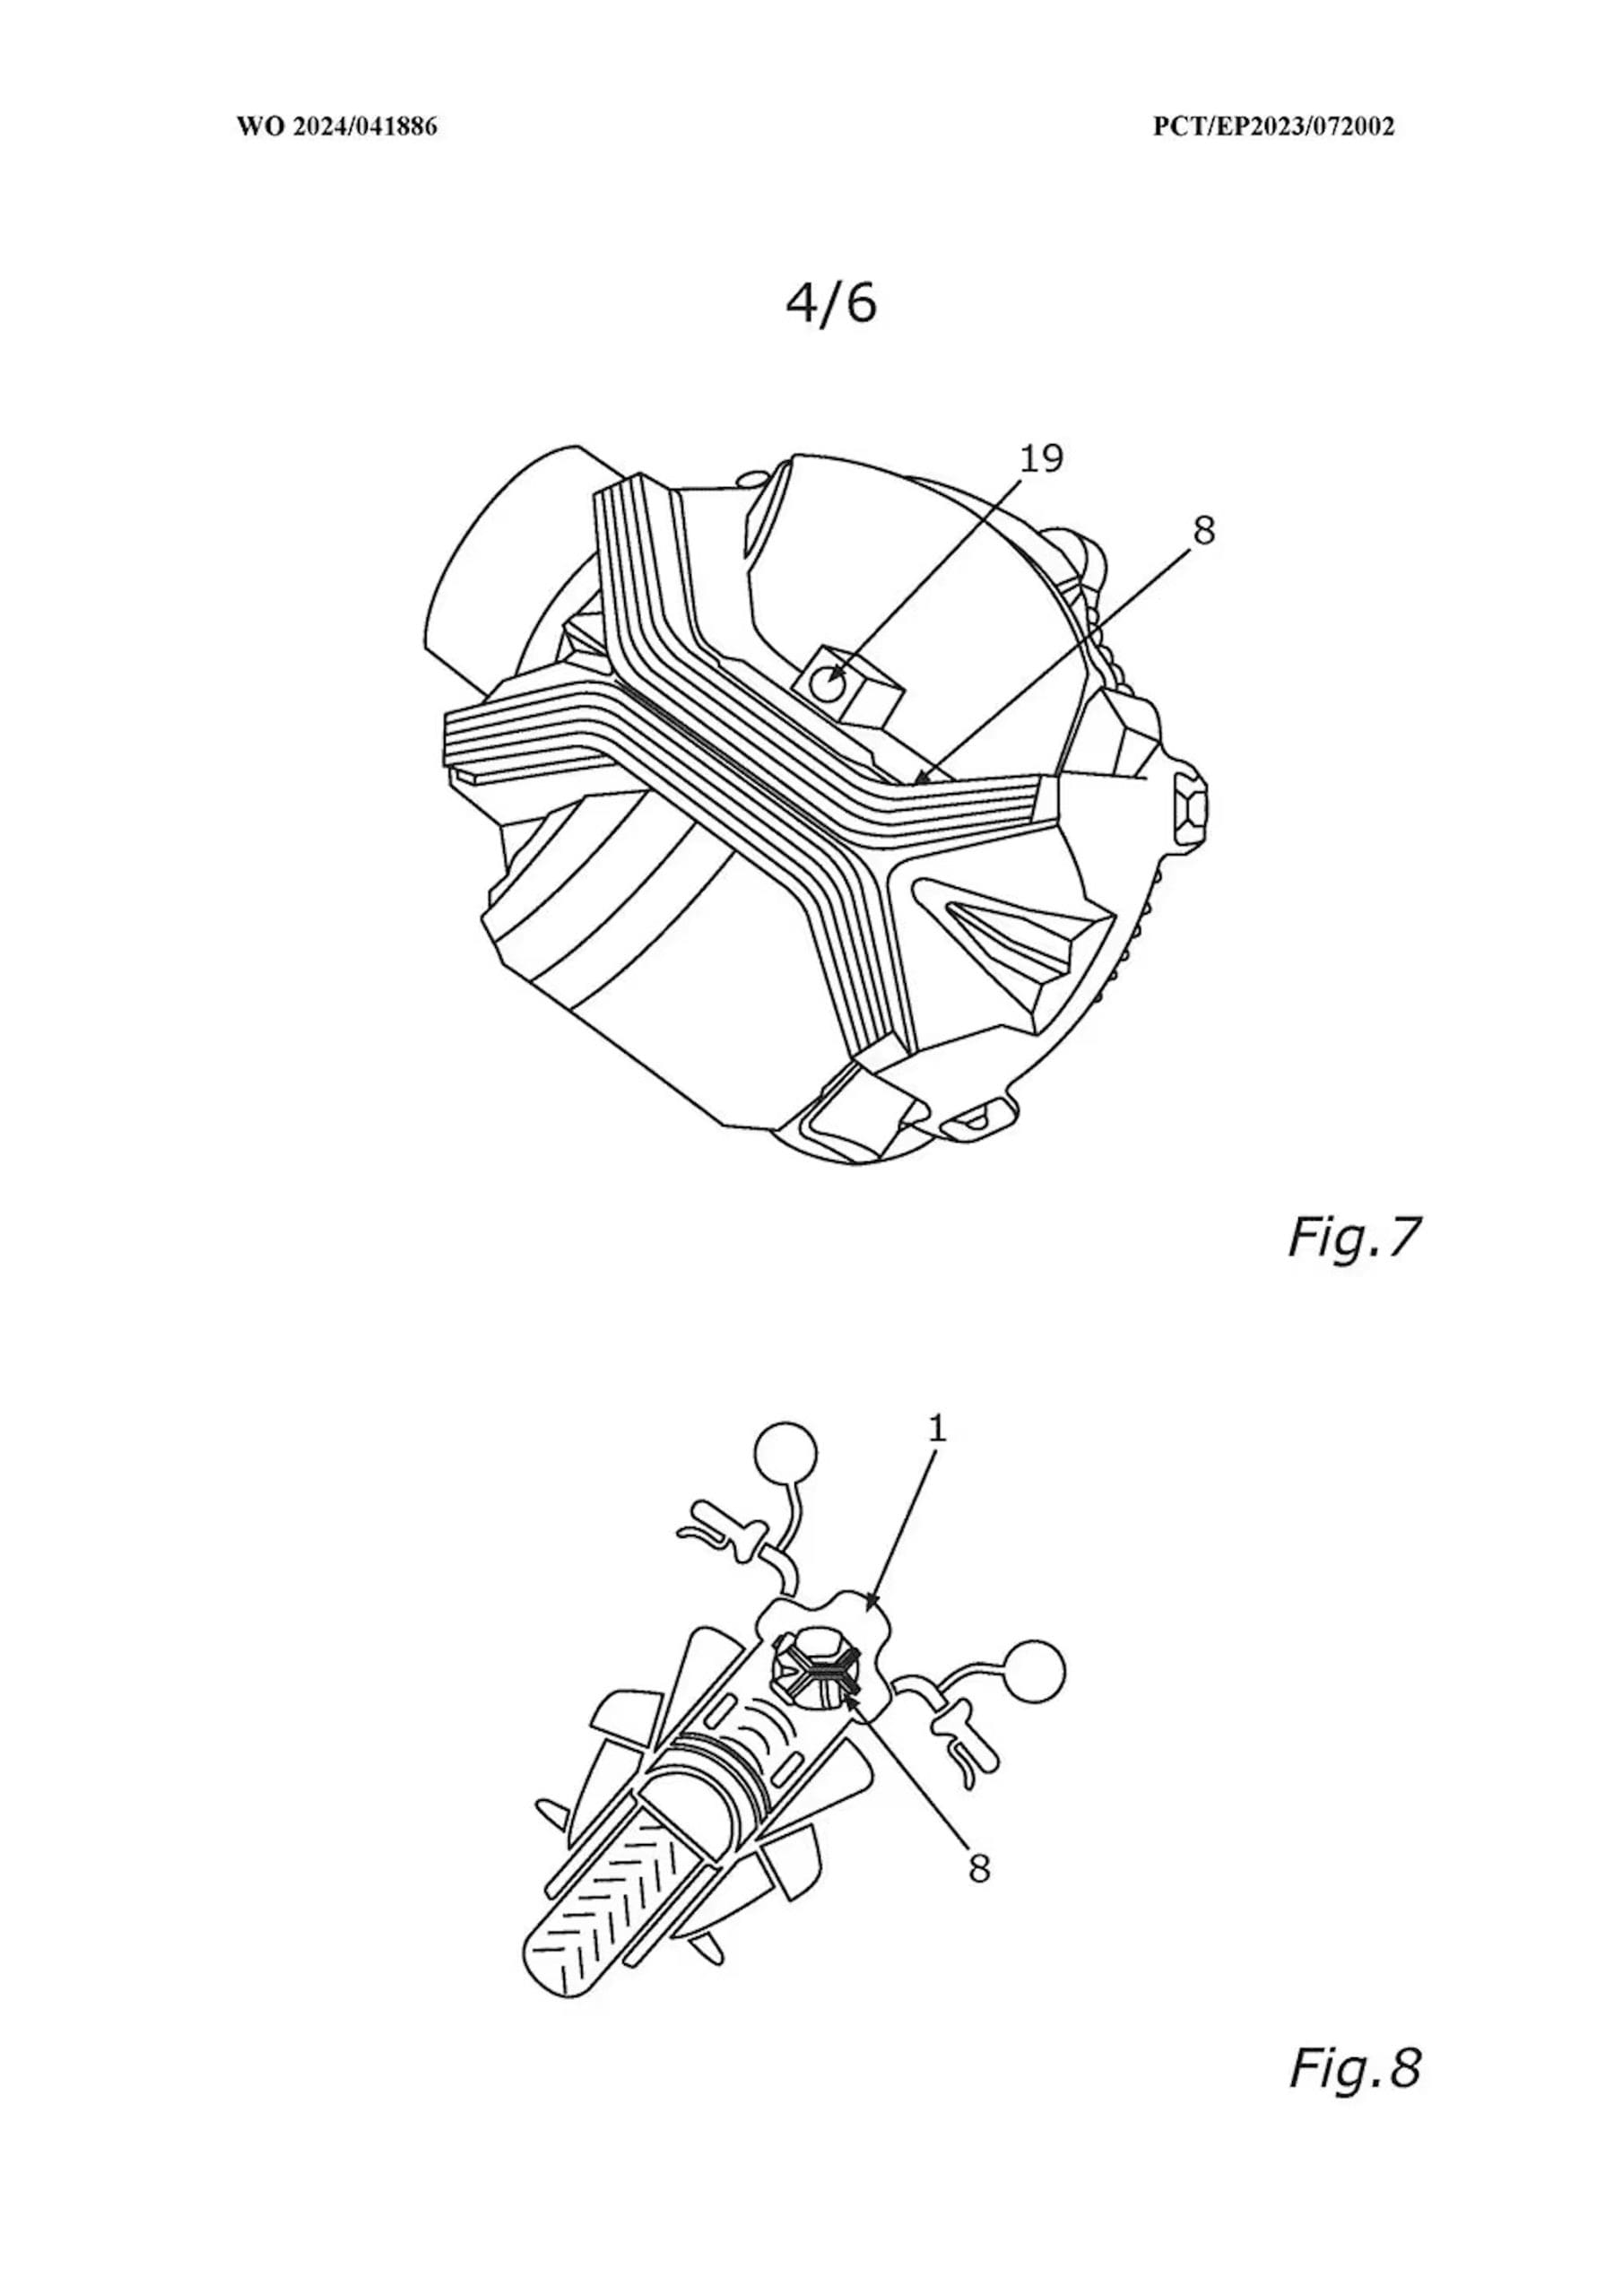 Blueprints of an adaptive motorcycle headlight using gimbal technology.